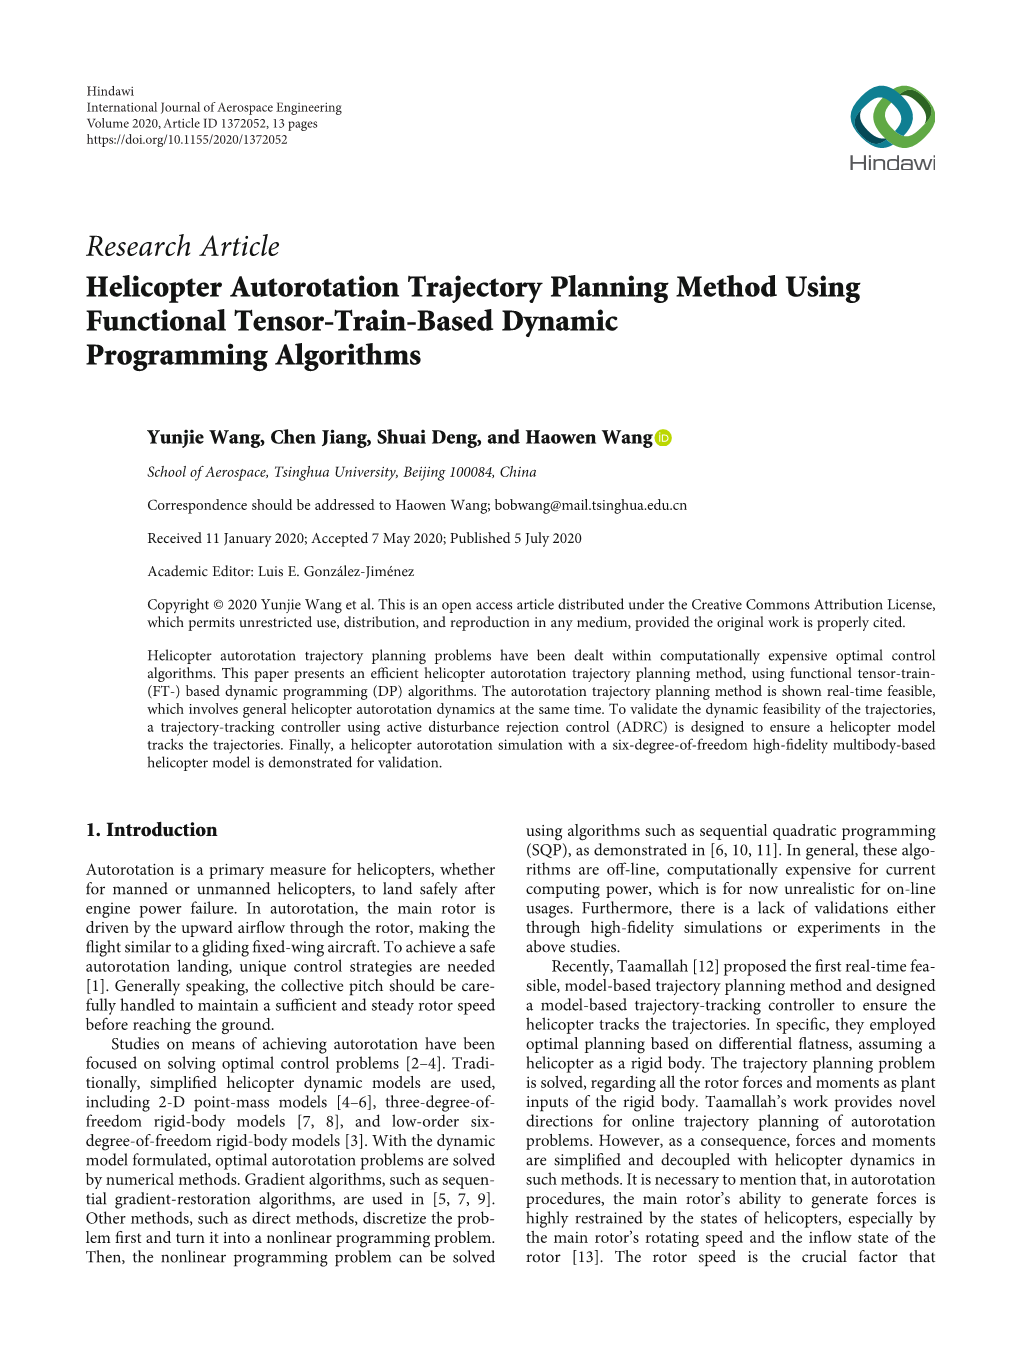 Helicopter Autorotation Trajectory Planning Method Using Functional Tensor-Train-Based Dynamic Programming Algorithms